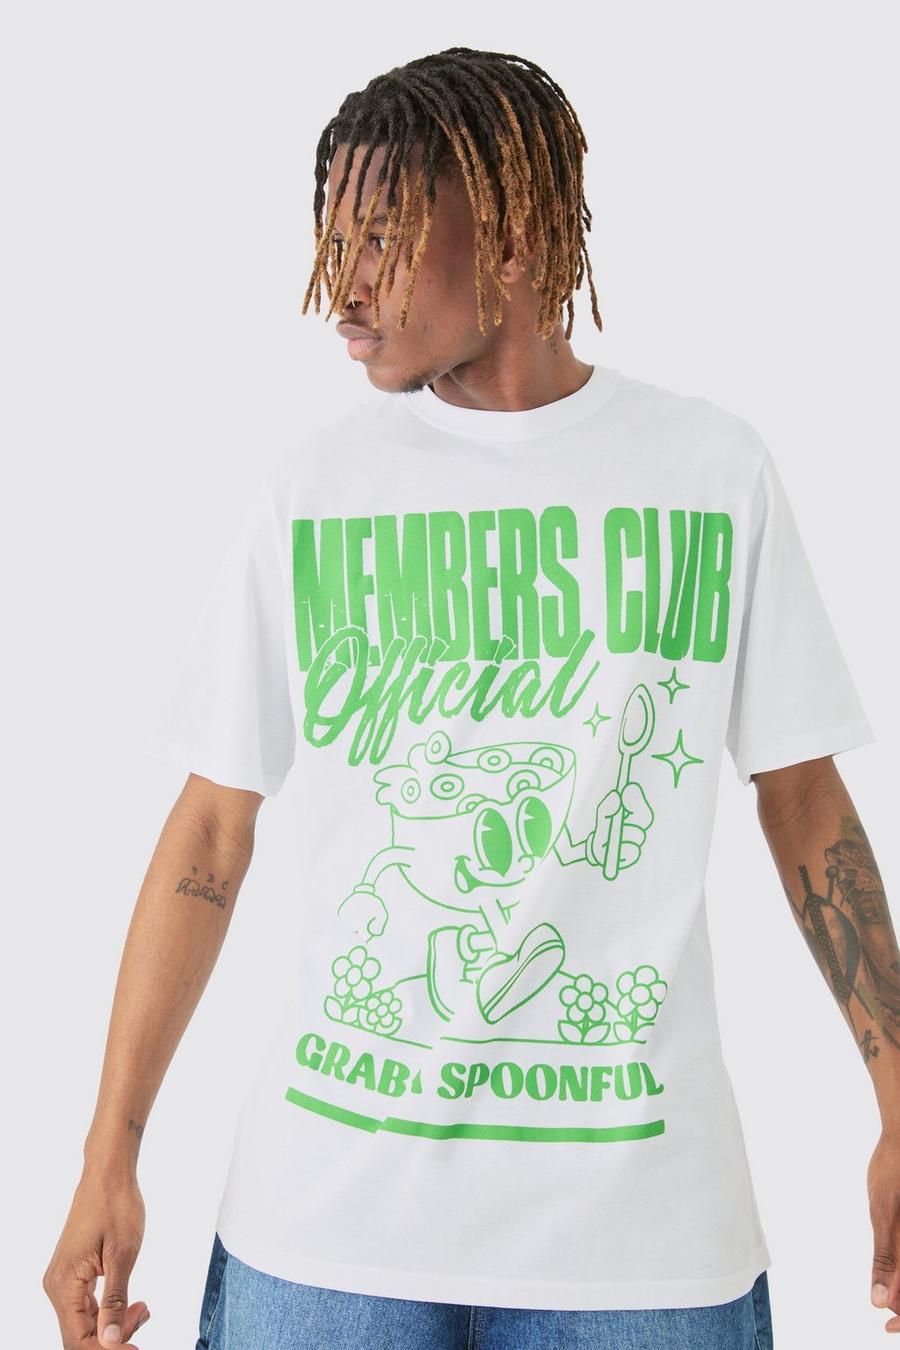 White Tall Members Club &#39;Spoonful&#39; Worldwide T-shirt i vitt tyg